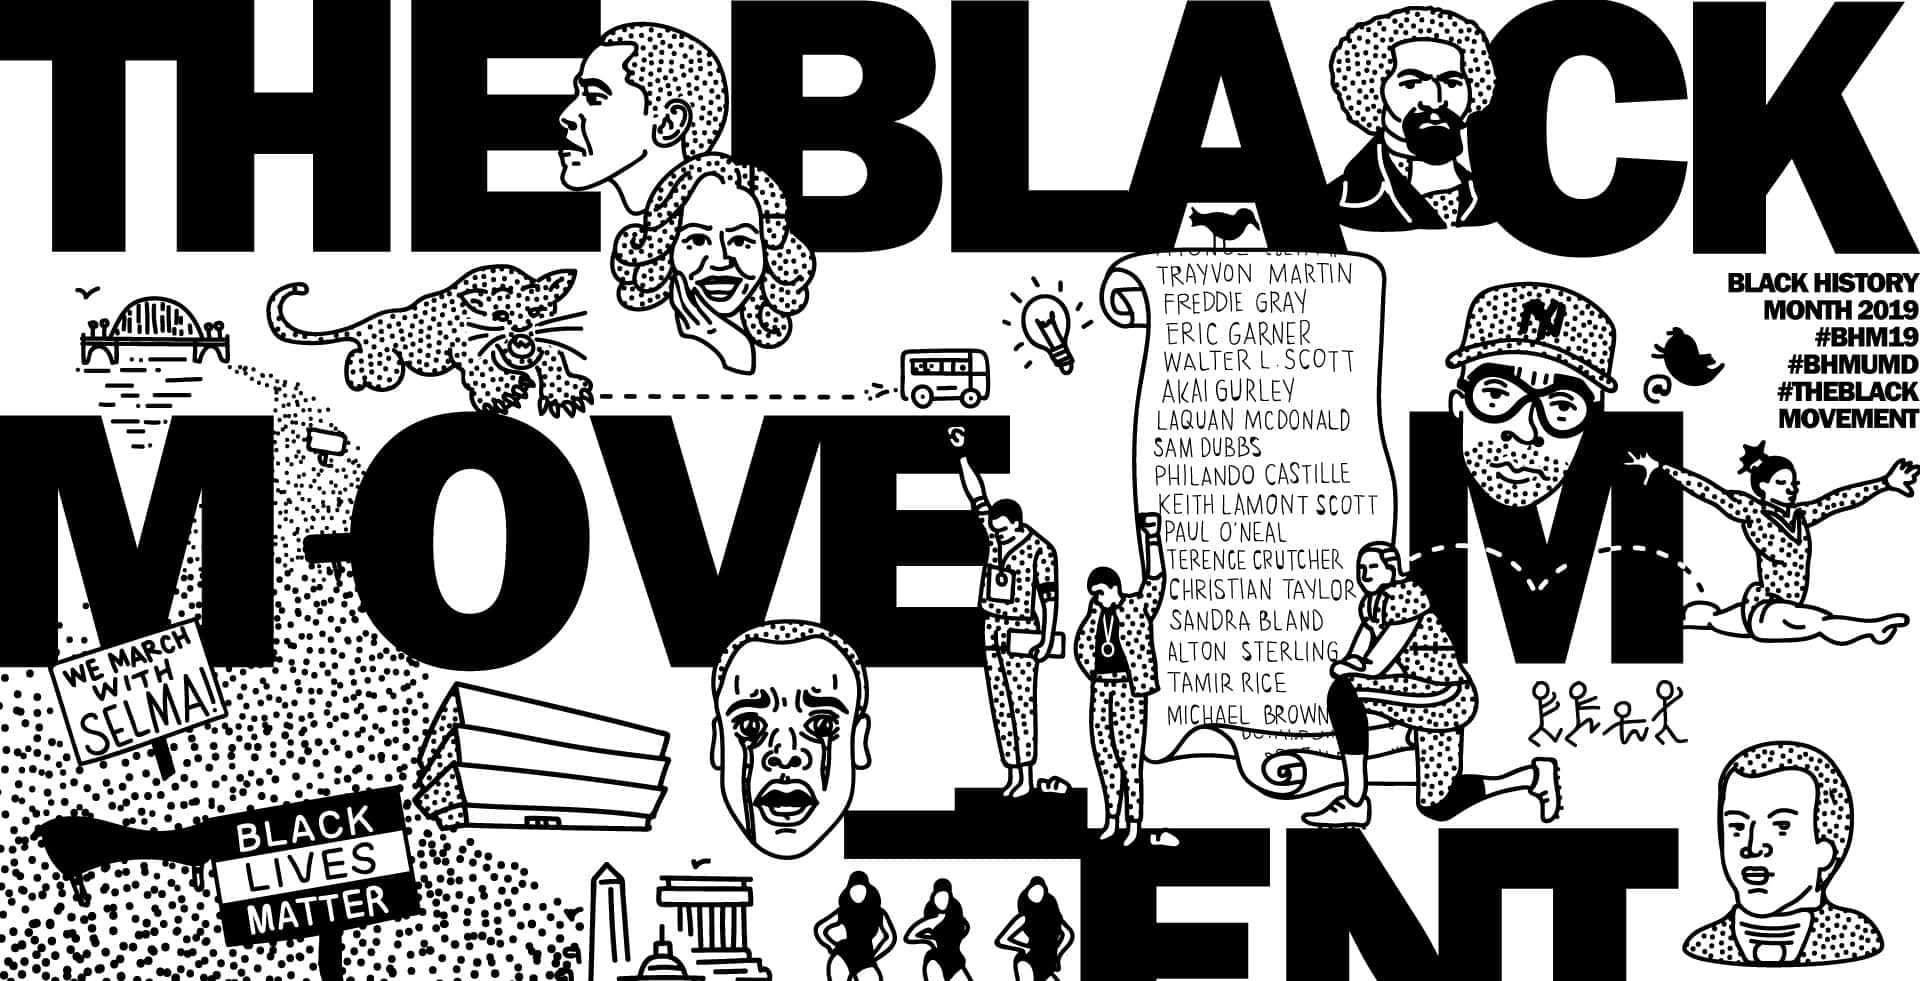 Black History Month Wallpaper  NawPic